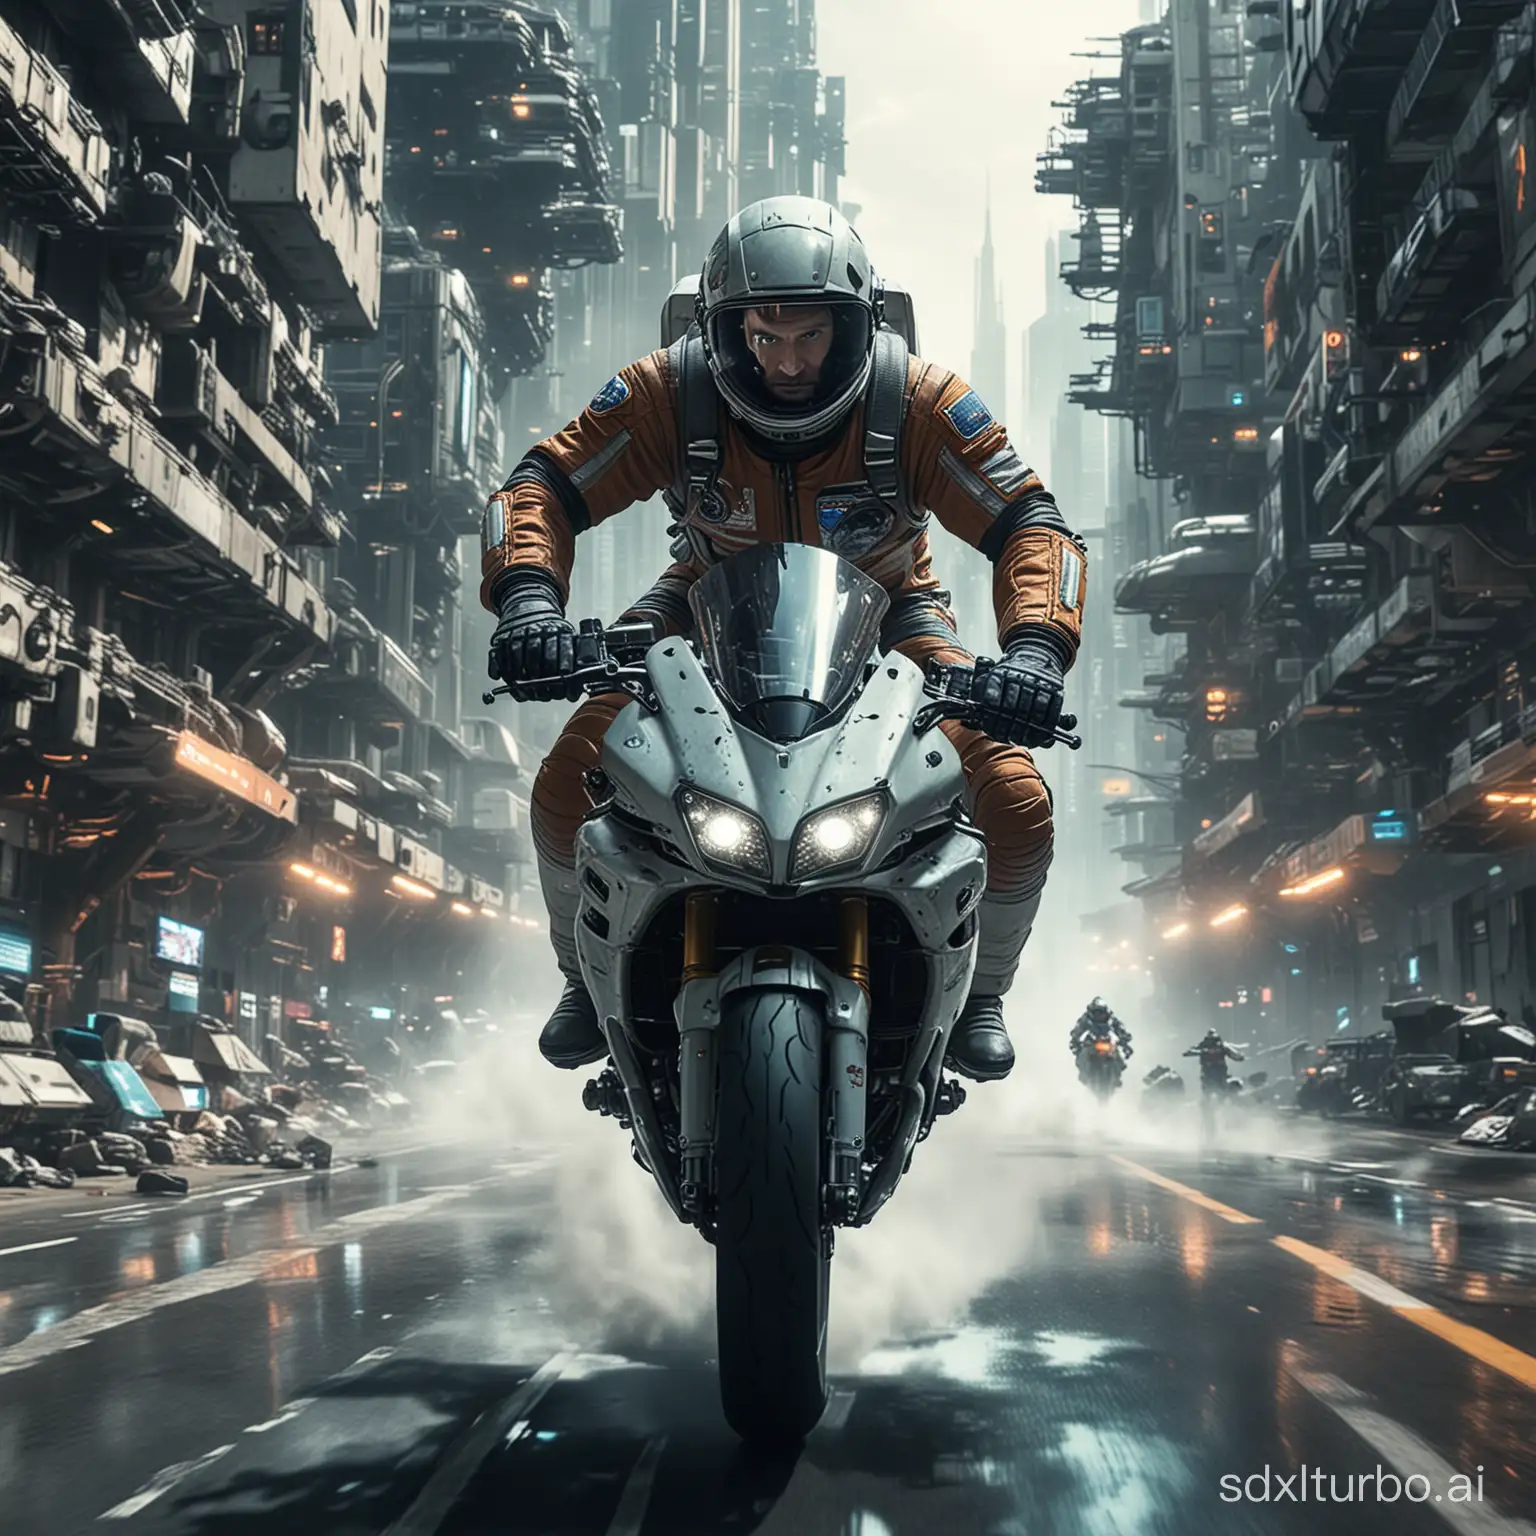 Futuristic-City-Motorcycle-Racing-Adventure